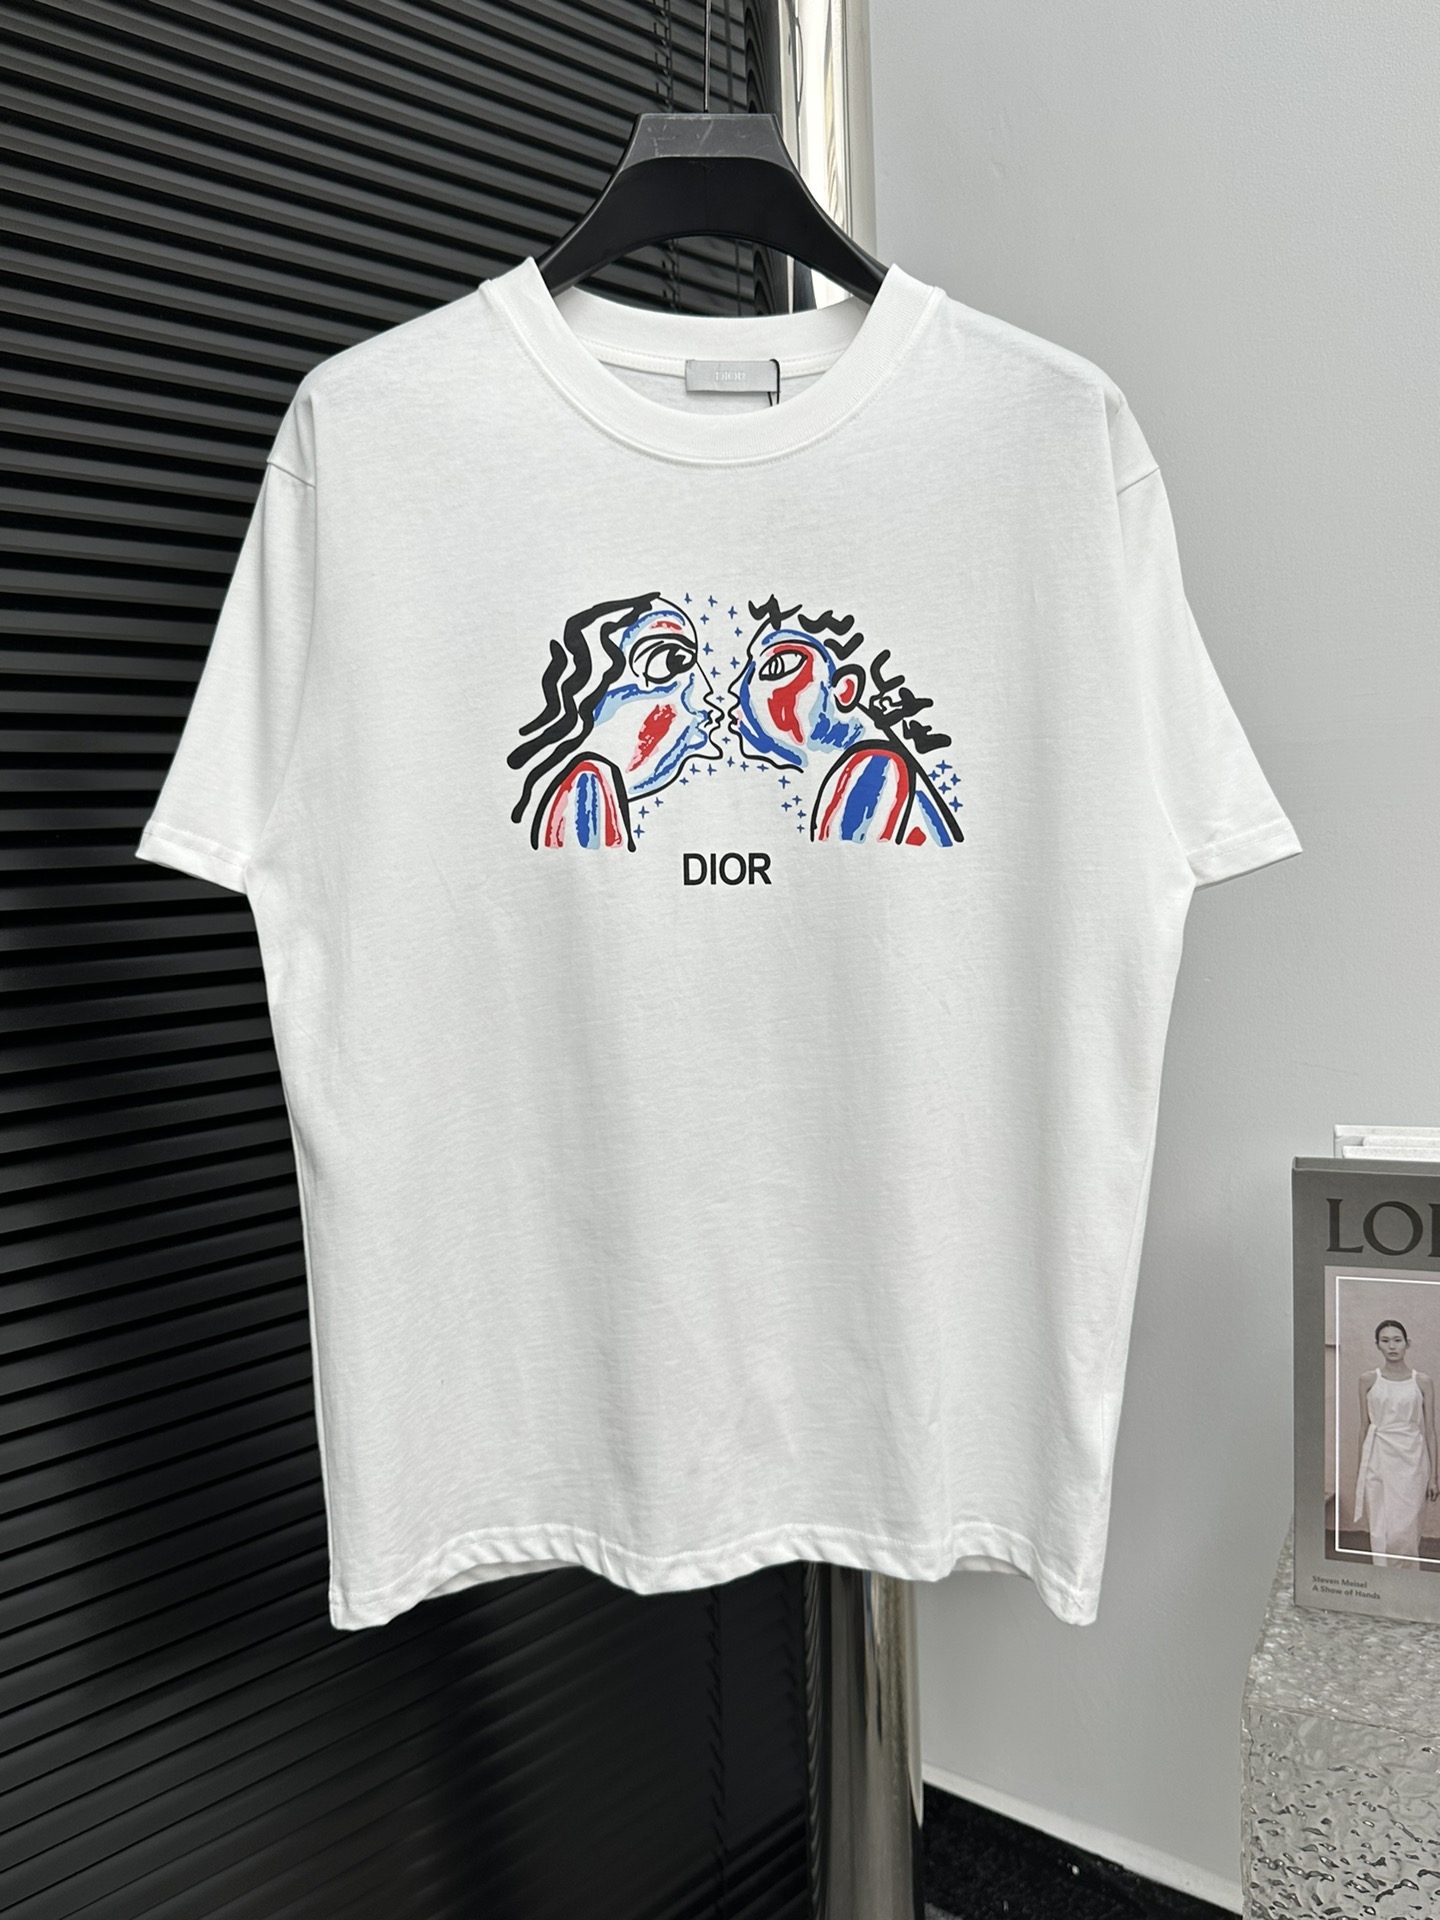 Dior Clothing T-Shirt Black White Printing Unisex Cotton Vintage Short Sleeve